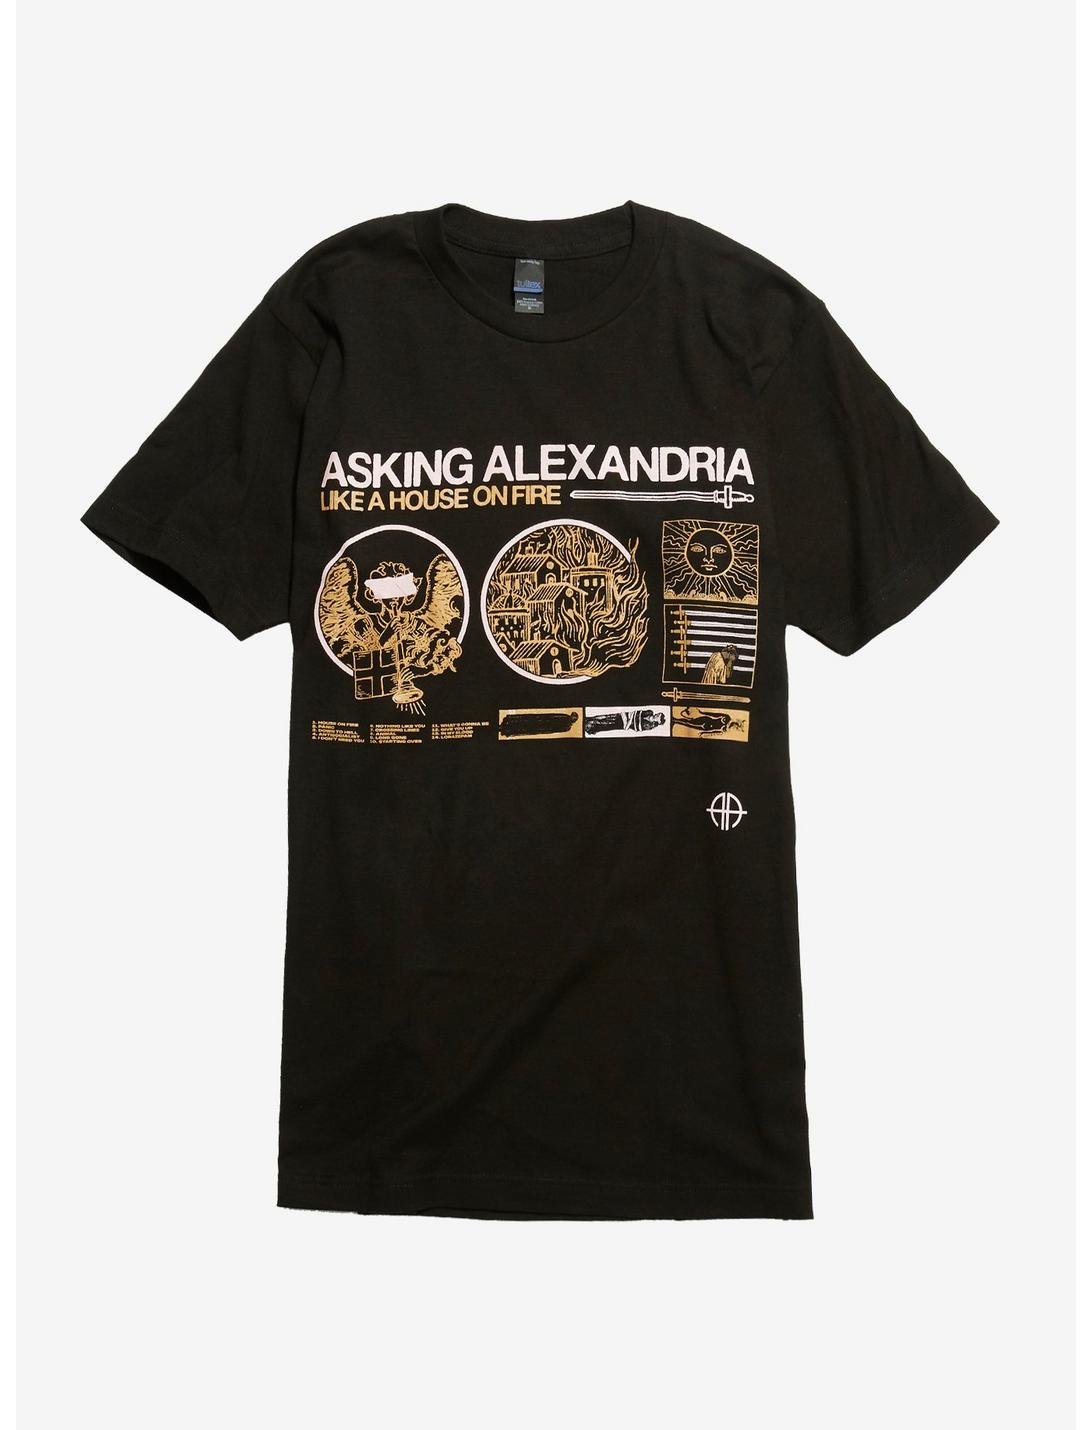 Asking Alexandria Like A House On Fire Album T-Shirt, BLACK, hi-res